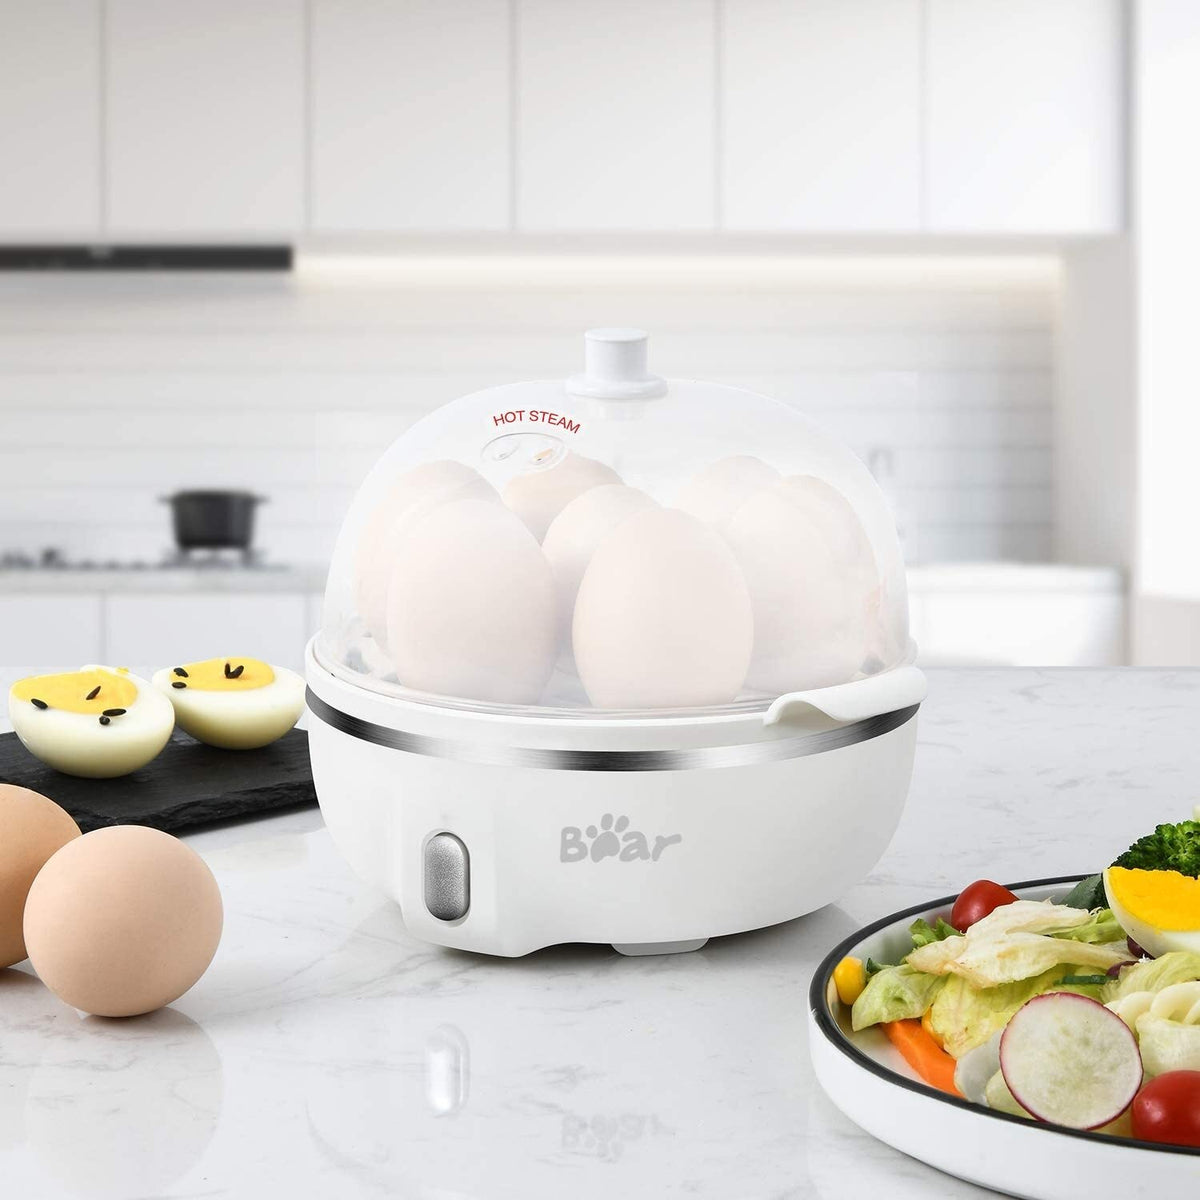 Bear Brand Rapid Electric Egg Cooker Poacher Bear, 14 Capacity Egg Boi –  LittleBearElectriconline